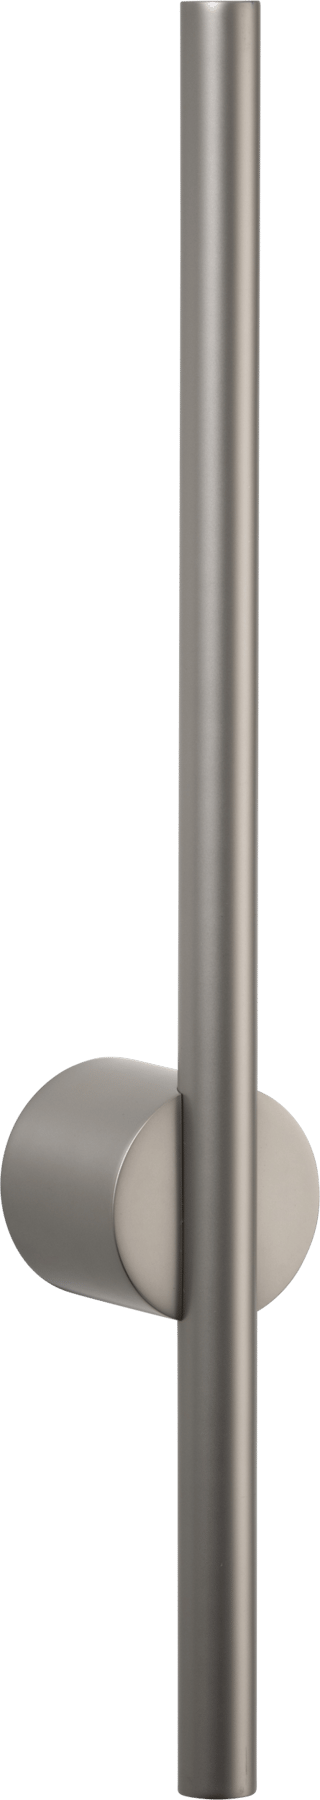 Associati Pull Handle 400mm – Smooth Nickel – 20743